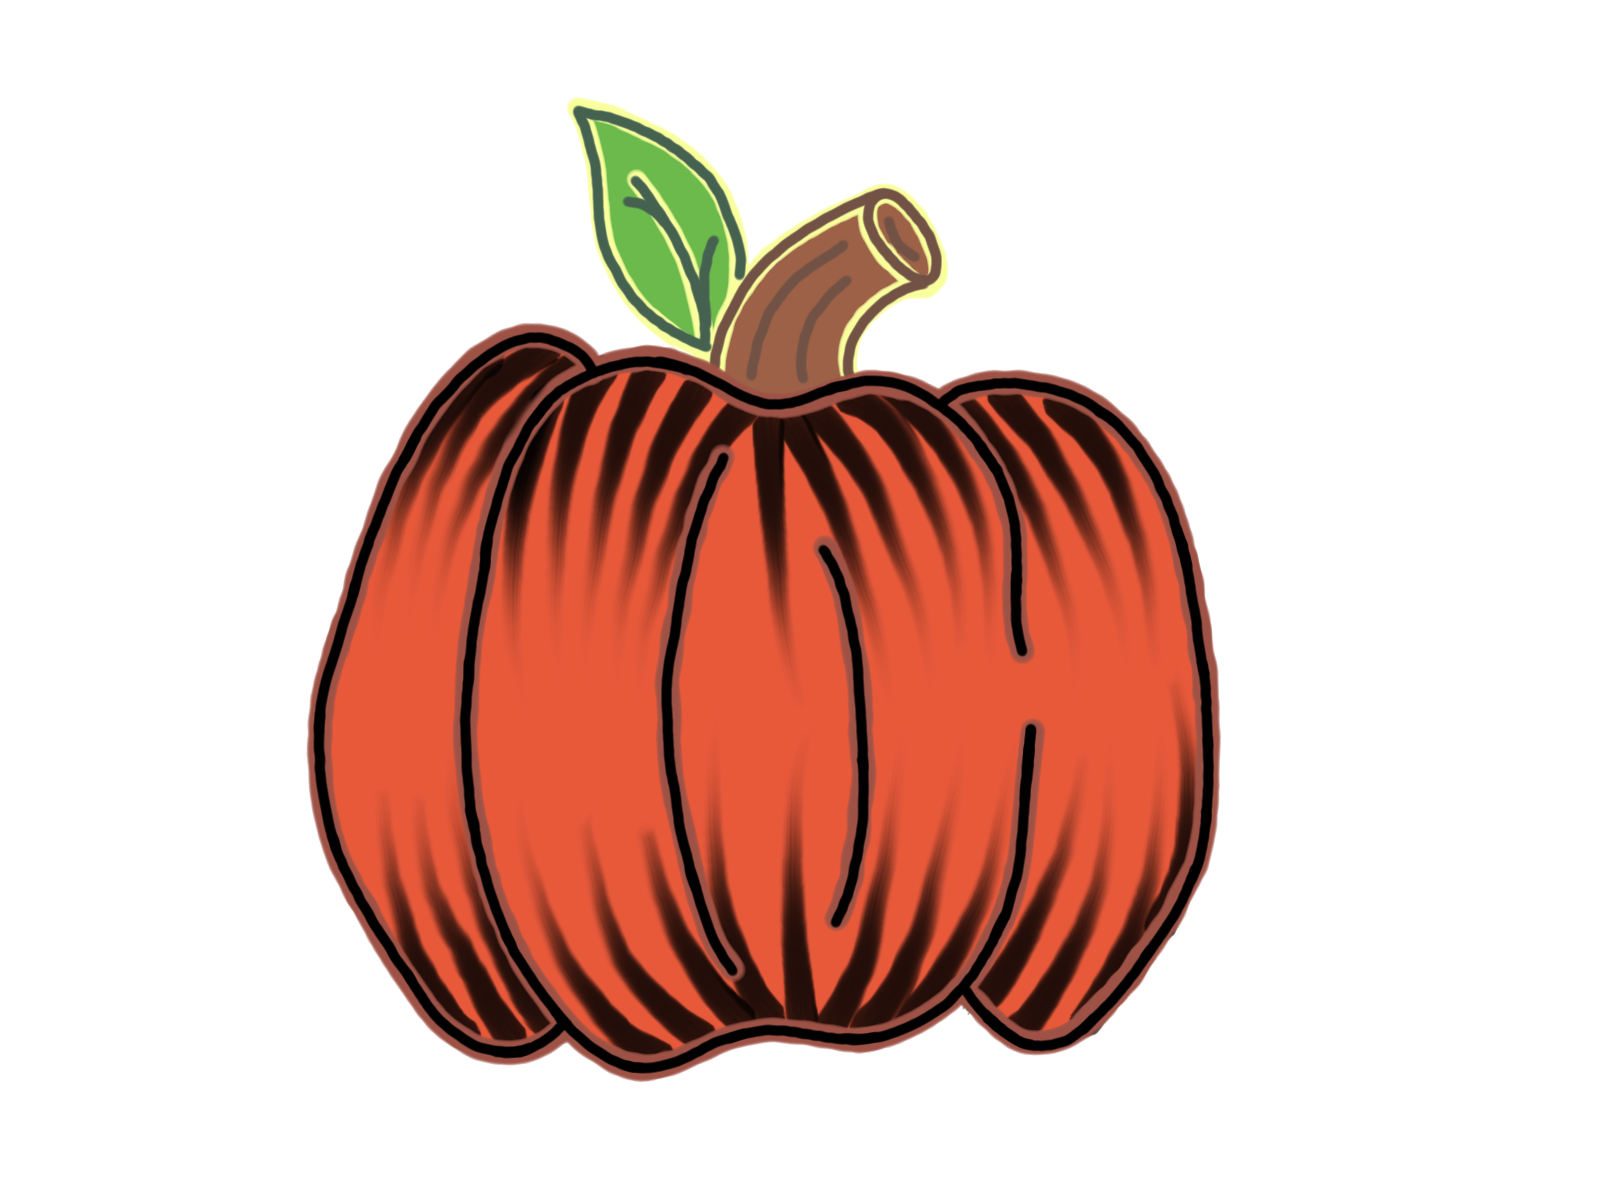 Pumpkin clipart apple, Pumpkin apple Transparent FREE for download on ...